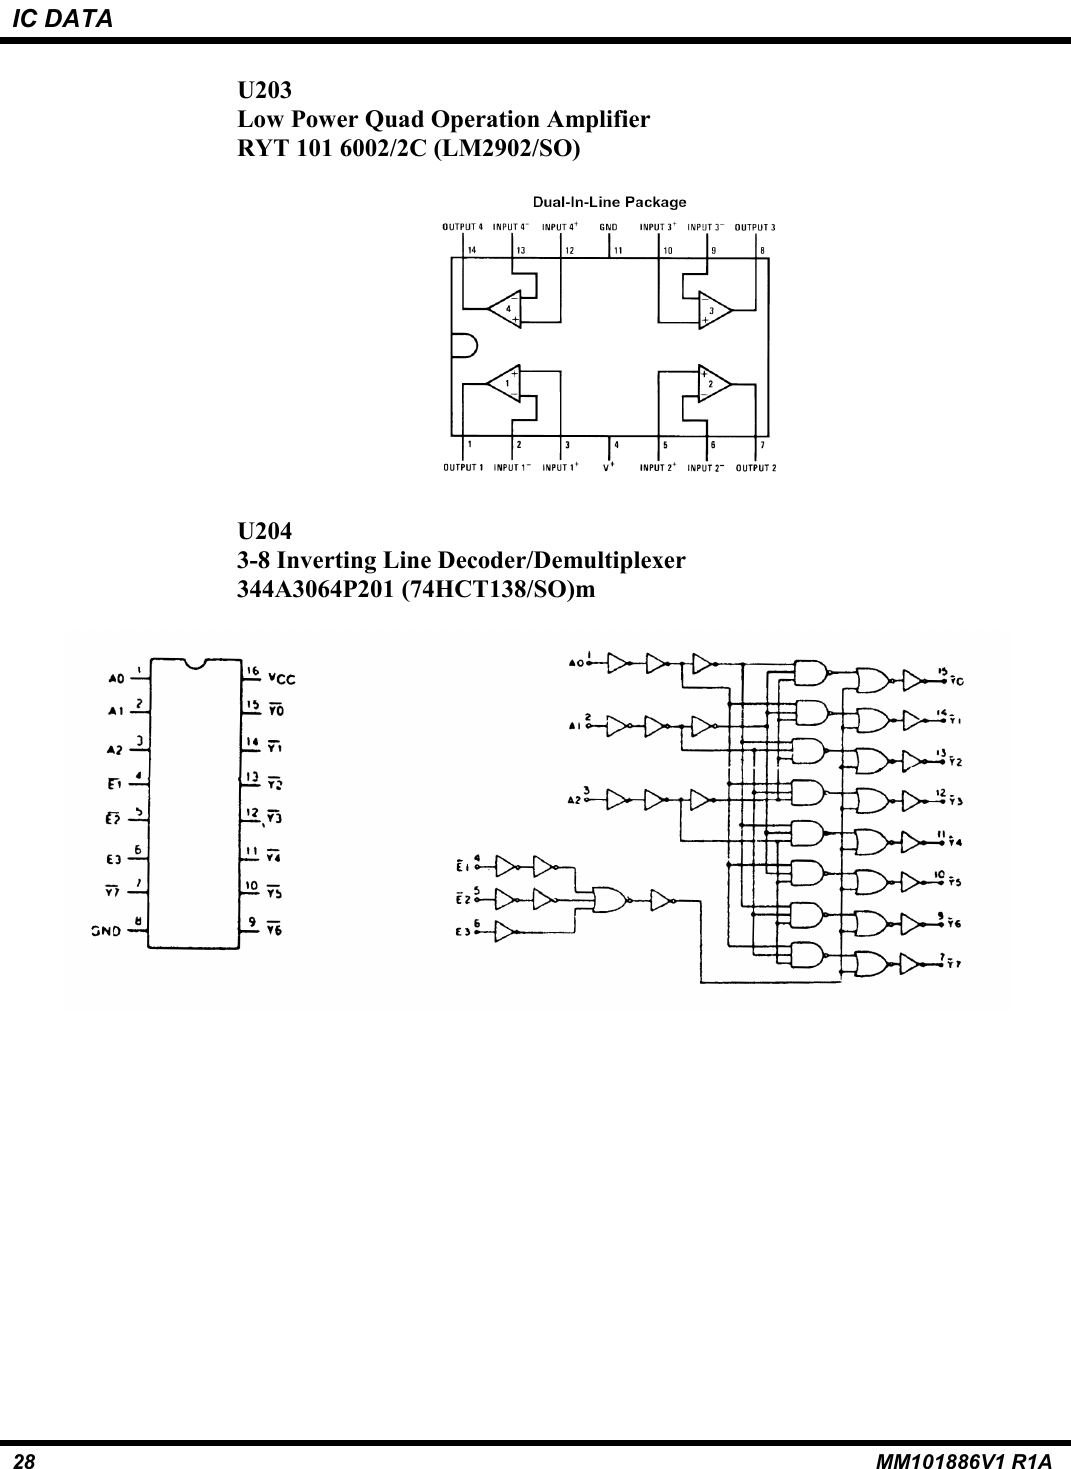 IC DATA28 MM101886V1 R1AU203Low Power Quad Operation AmplifierRYT 101 6002/2C (LM2902/SO)U2043-8 Inverting Line Decoder/Demultiplexer344A3064P201 (74HCT138/SO)m